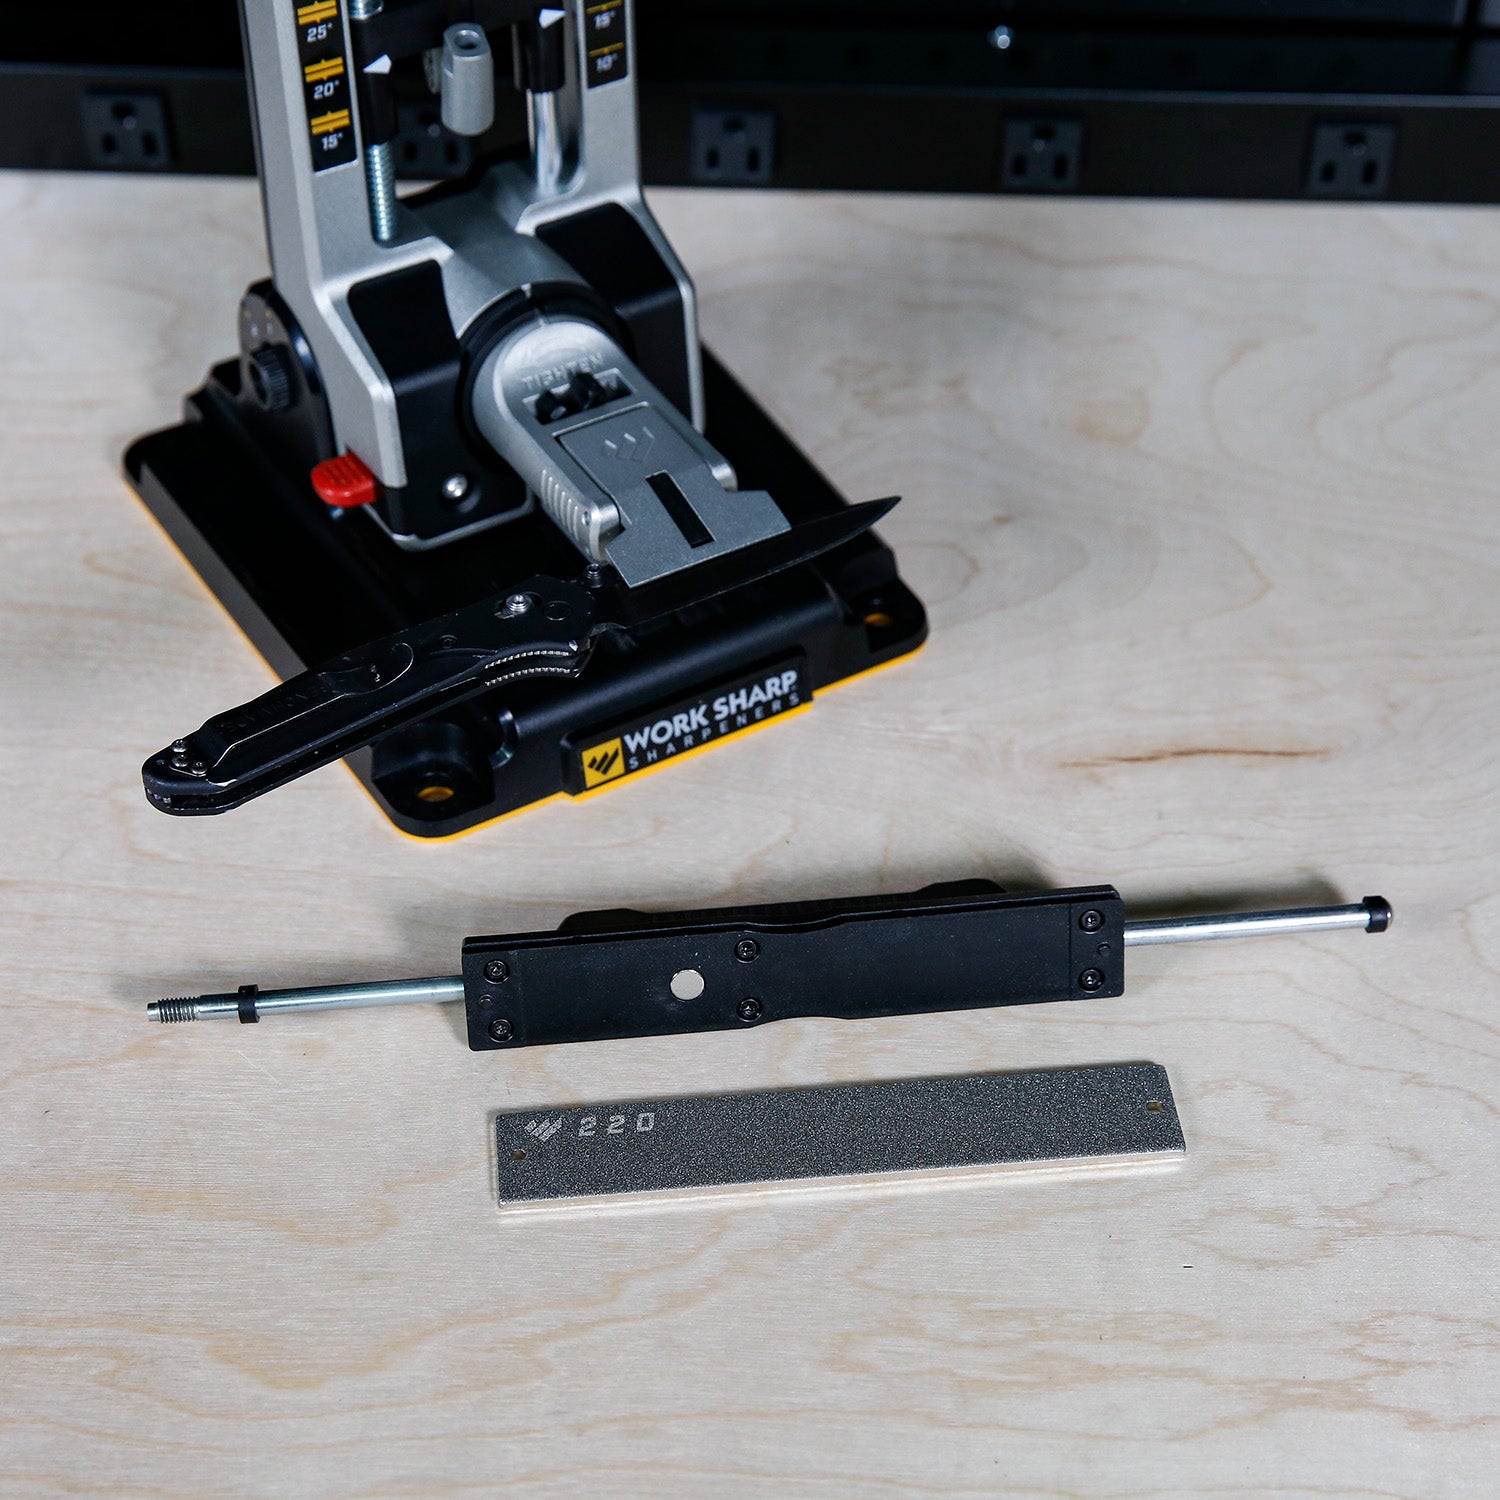 Work Sharp Professional Precision Adjust Knife Sharpener with